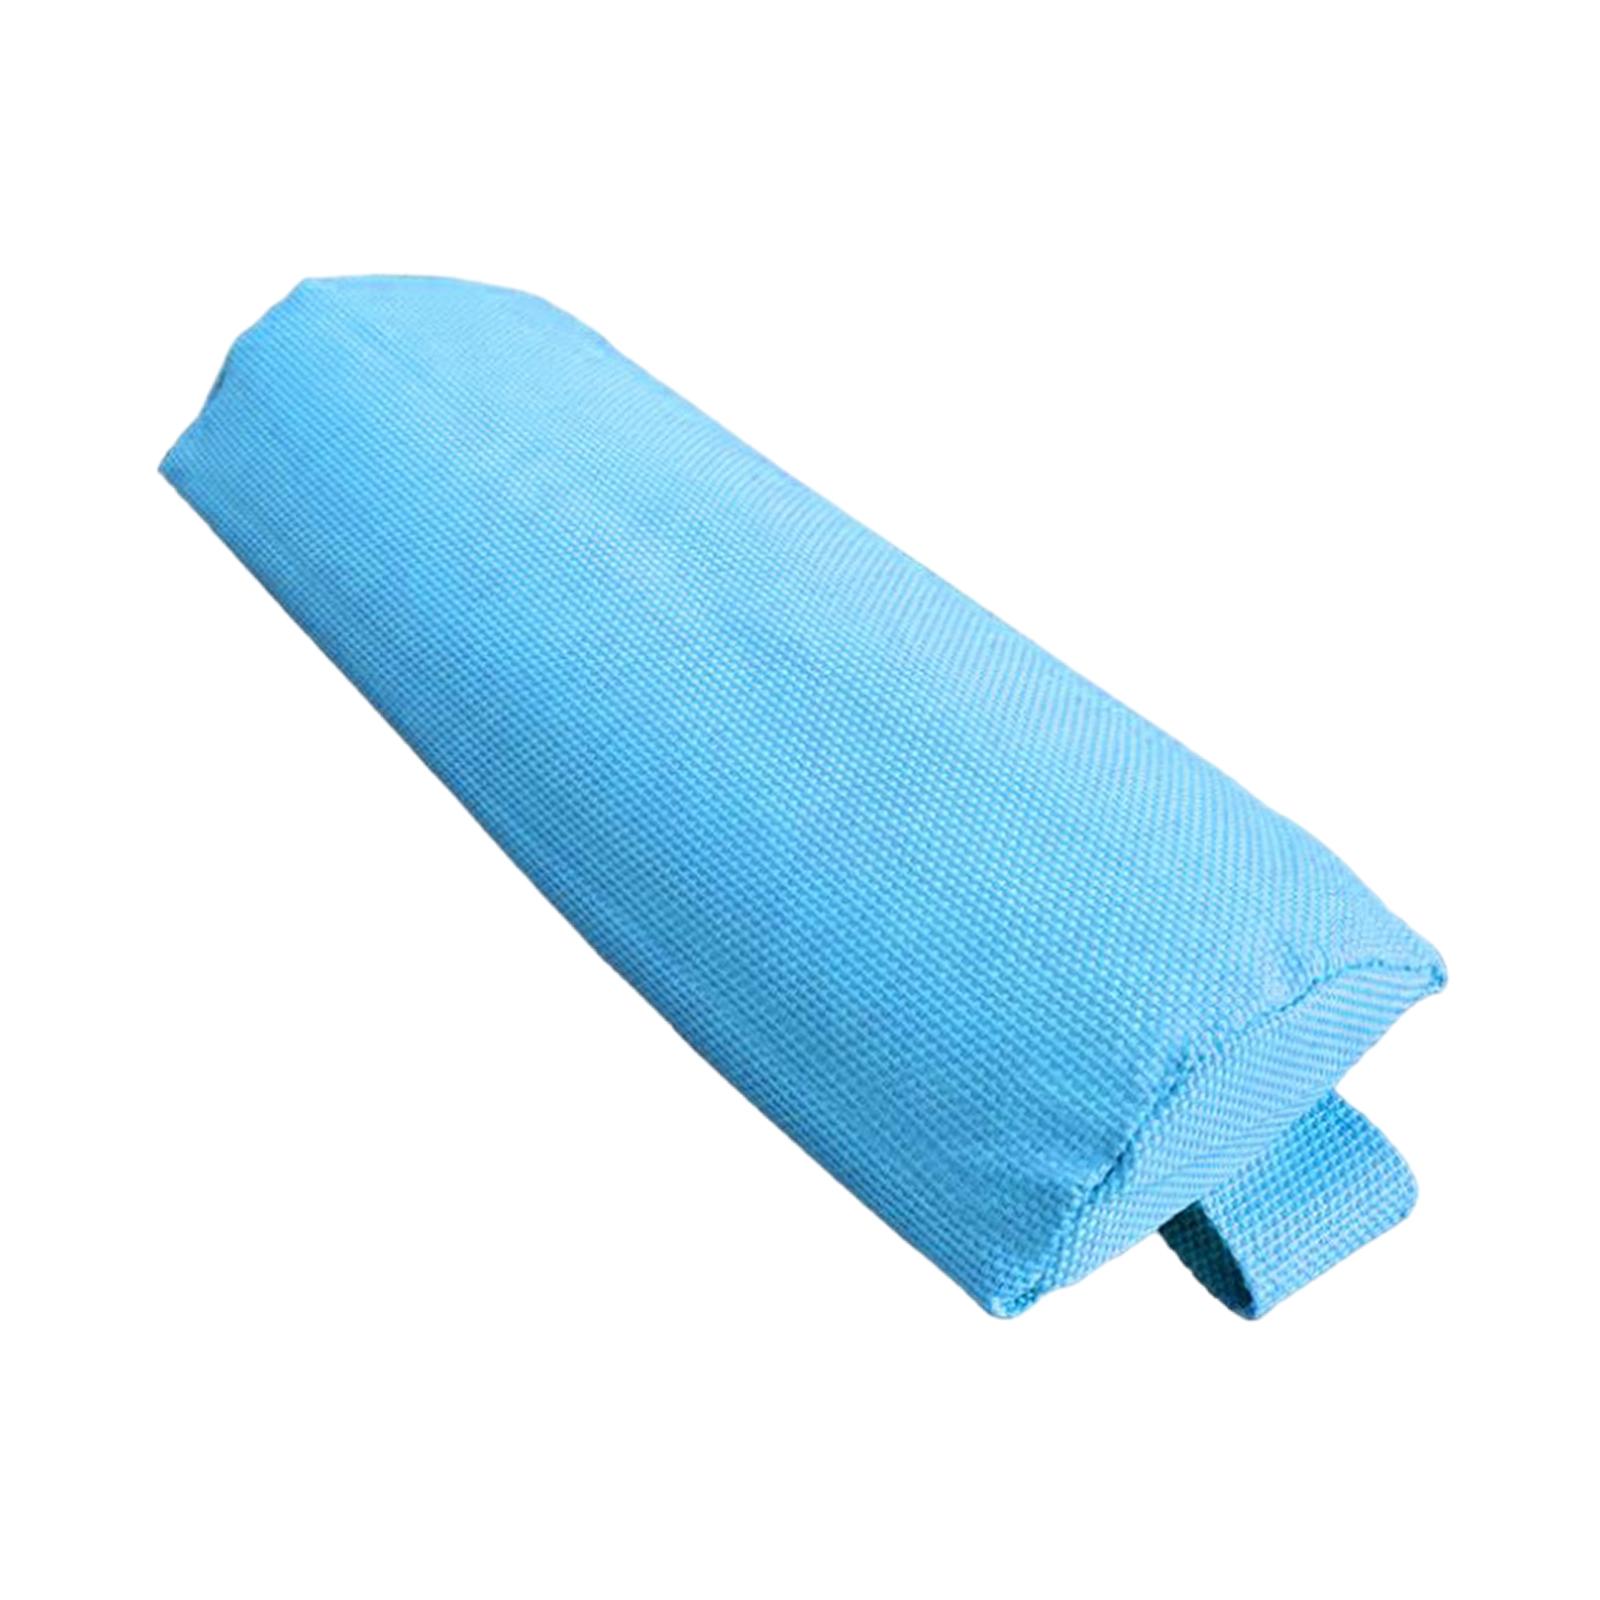 Comfortable Head Cushion Pillow for Folding Chair Beach Patio Chair Headrest blue - image 3 of 6